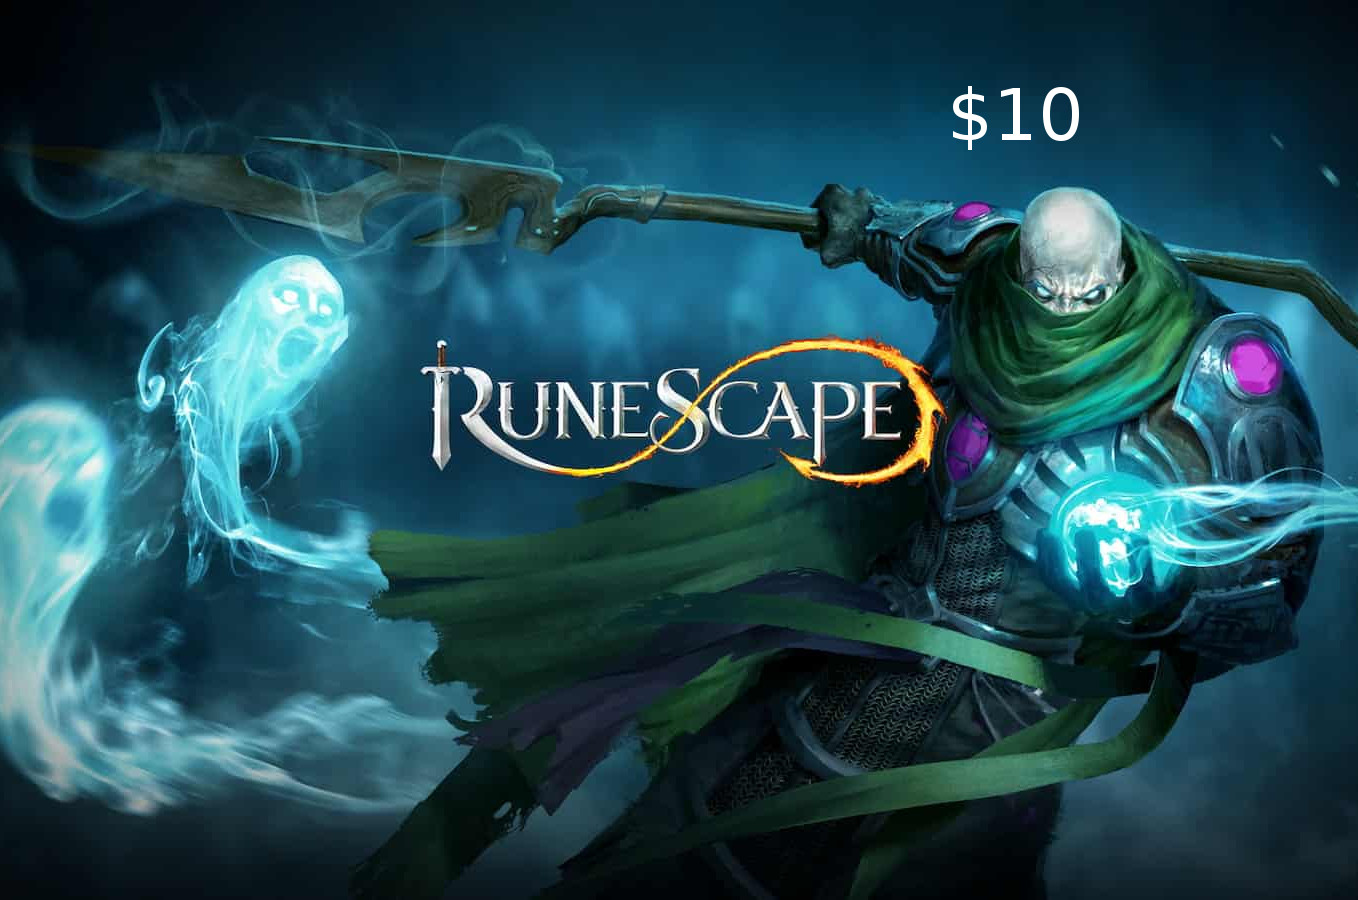 Runescape $10 Prepaid Game Card, $10.11